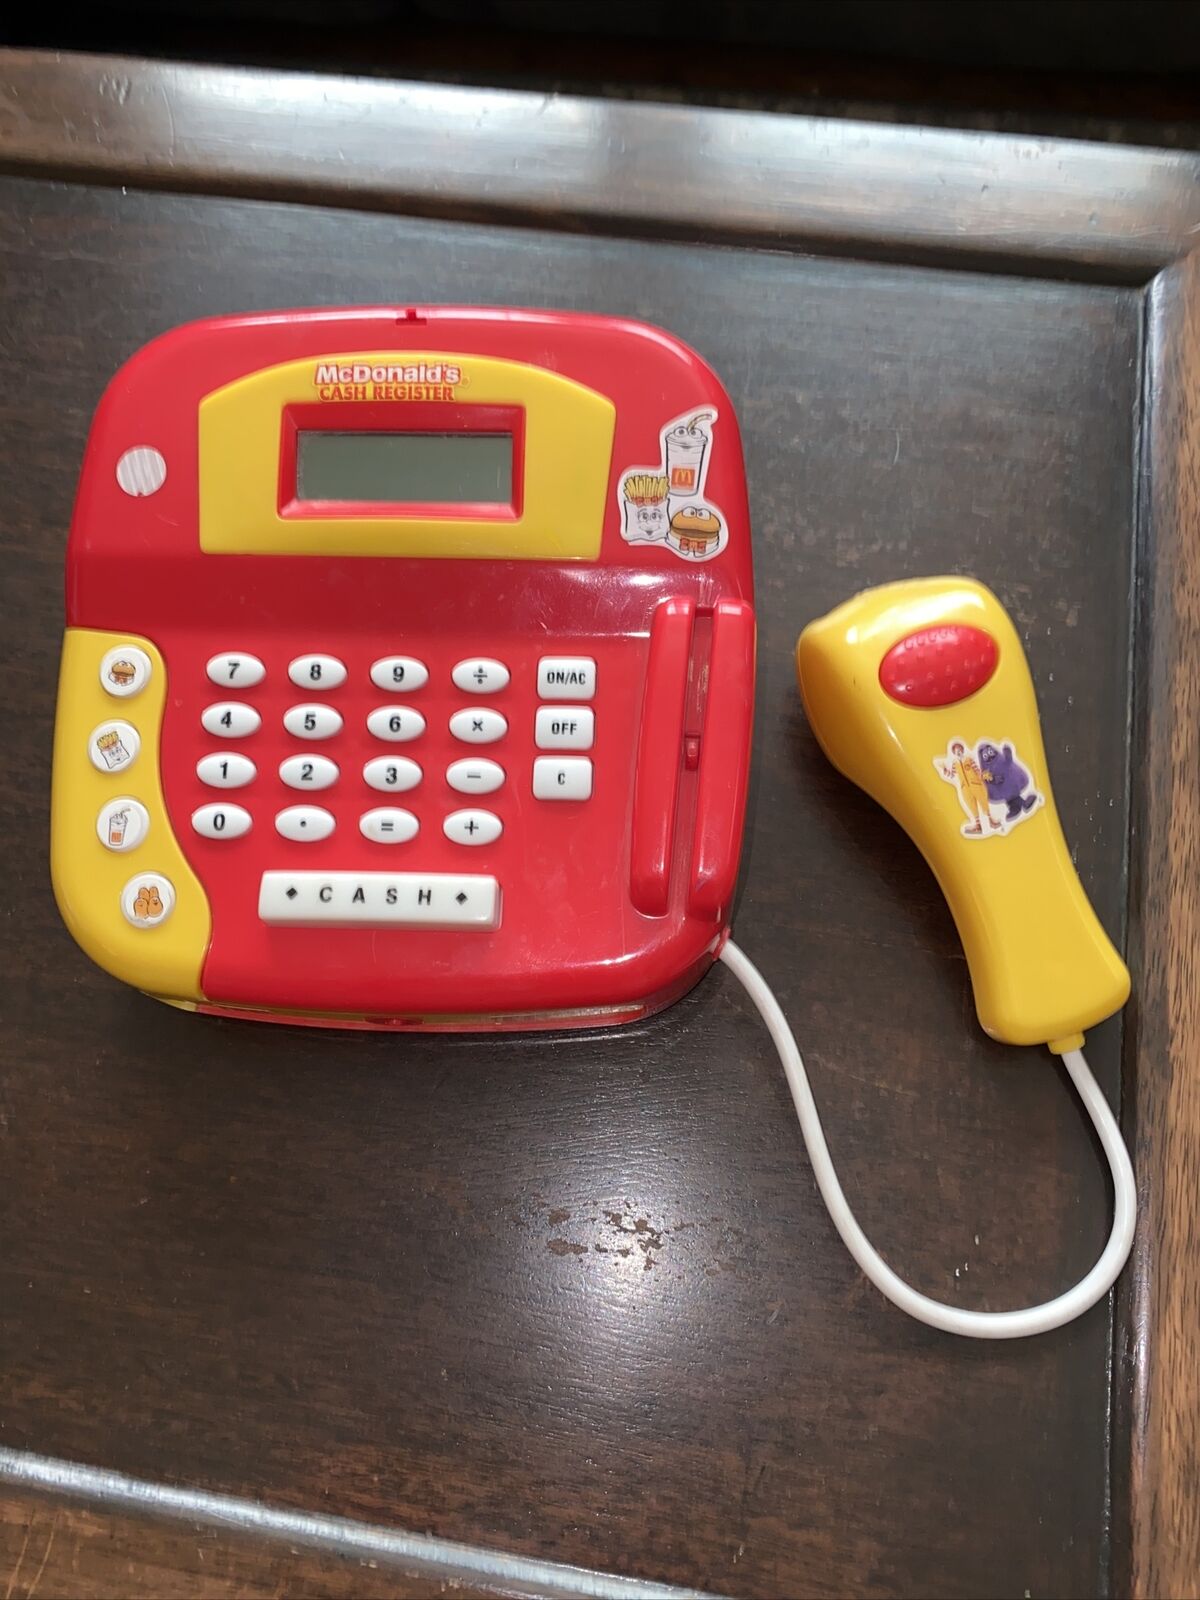 Mcdonald's Play Restaurant Toy Electronic Cash Register Calculator Vintage